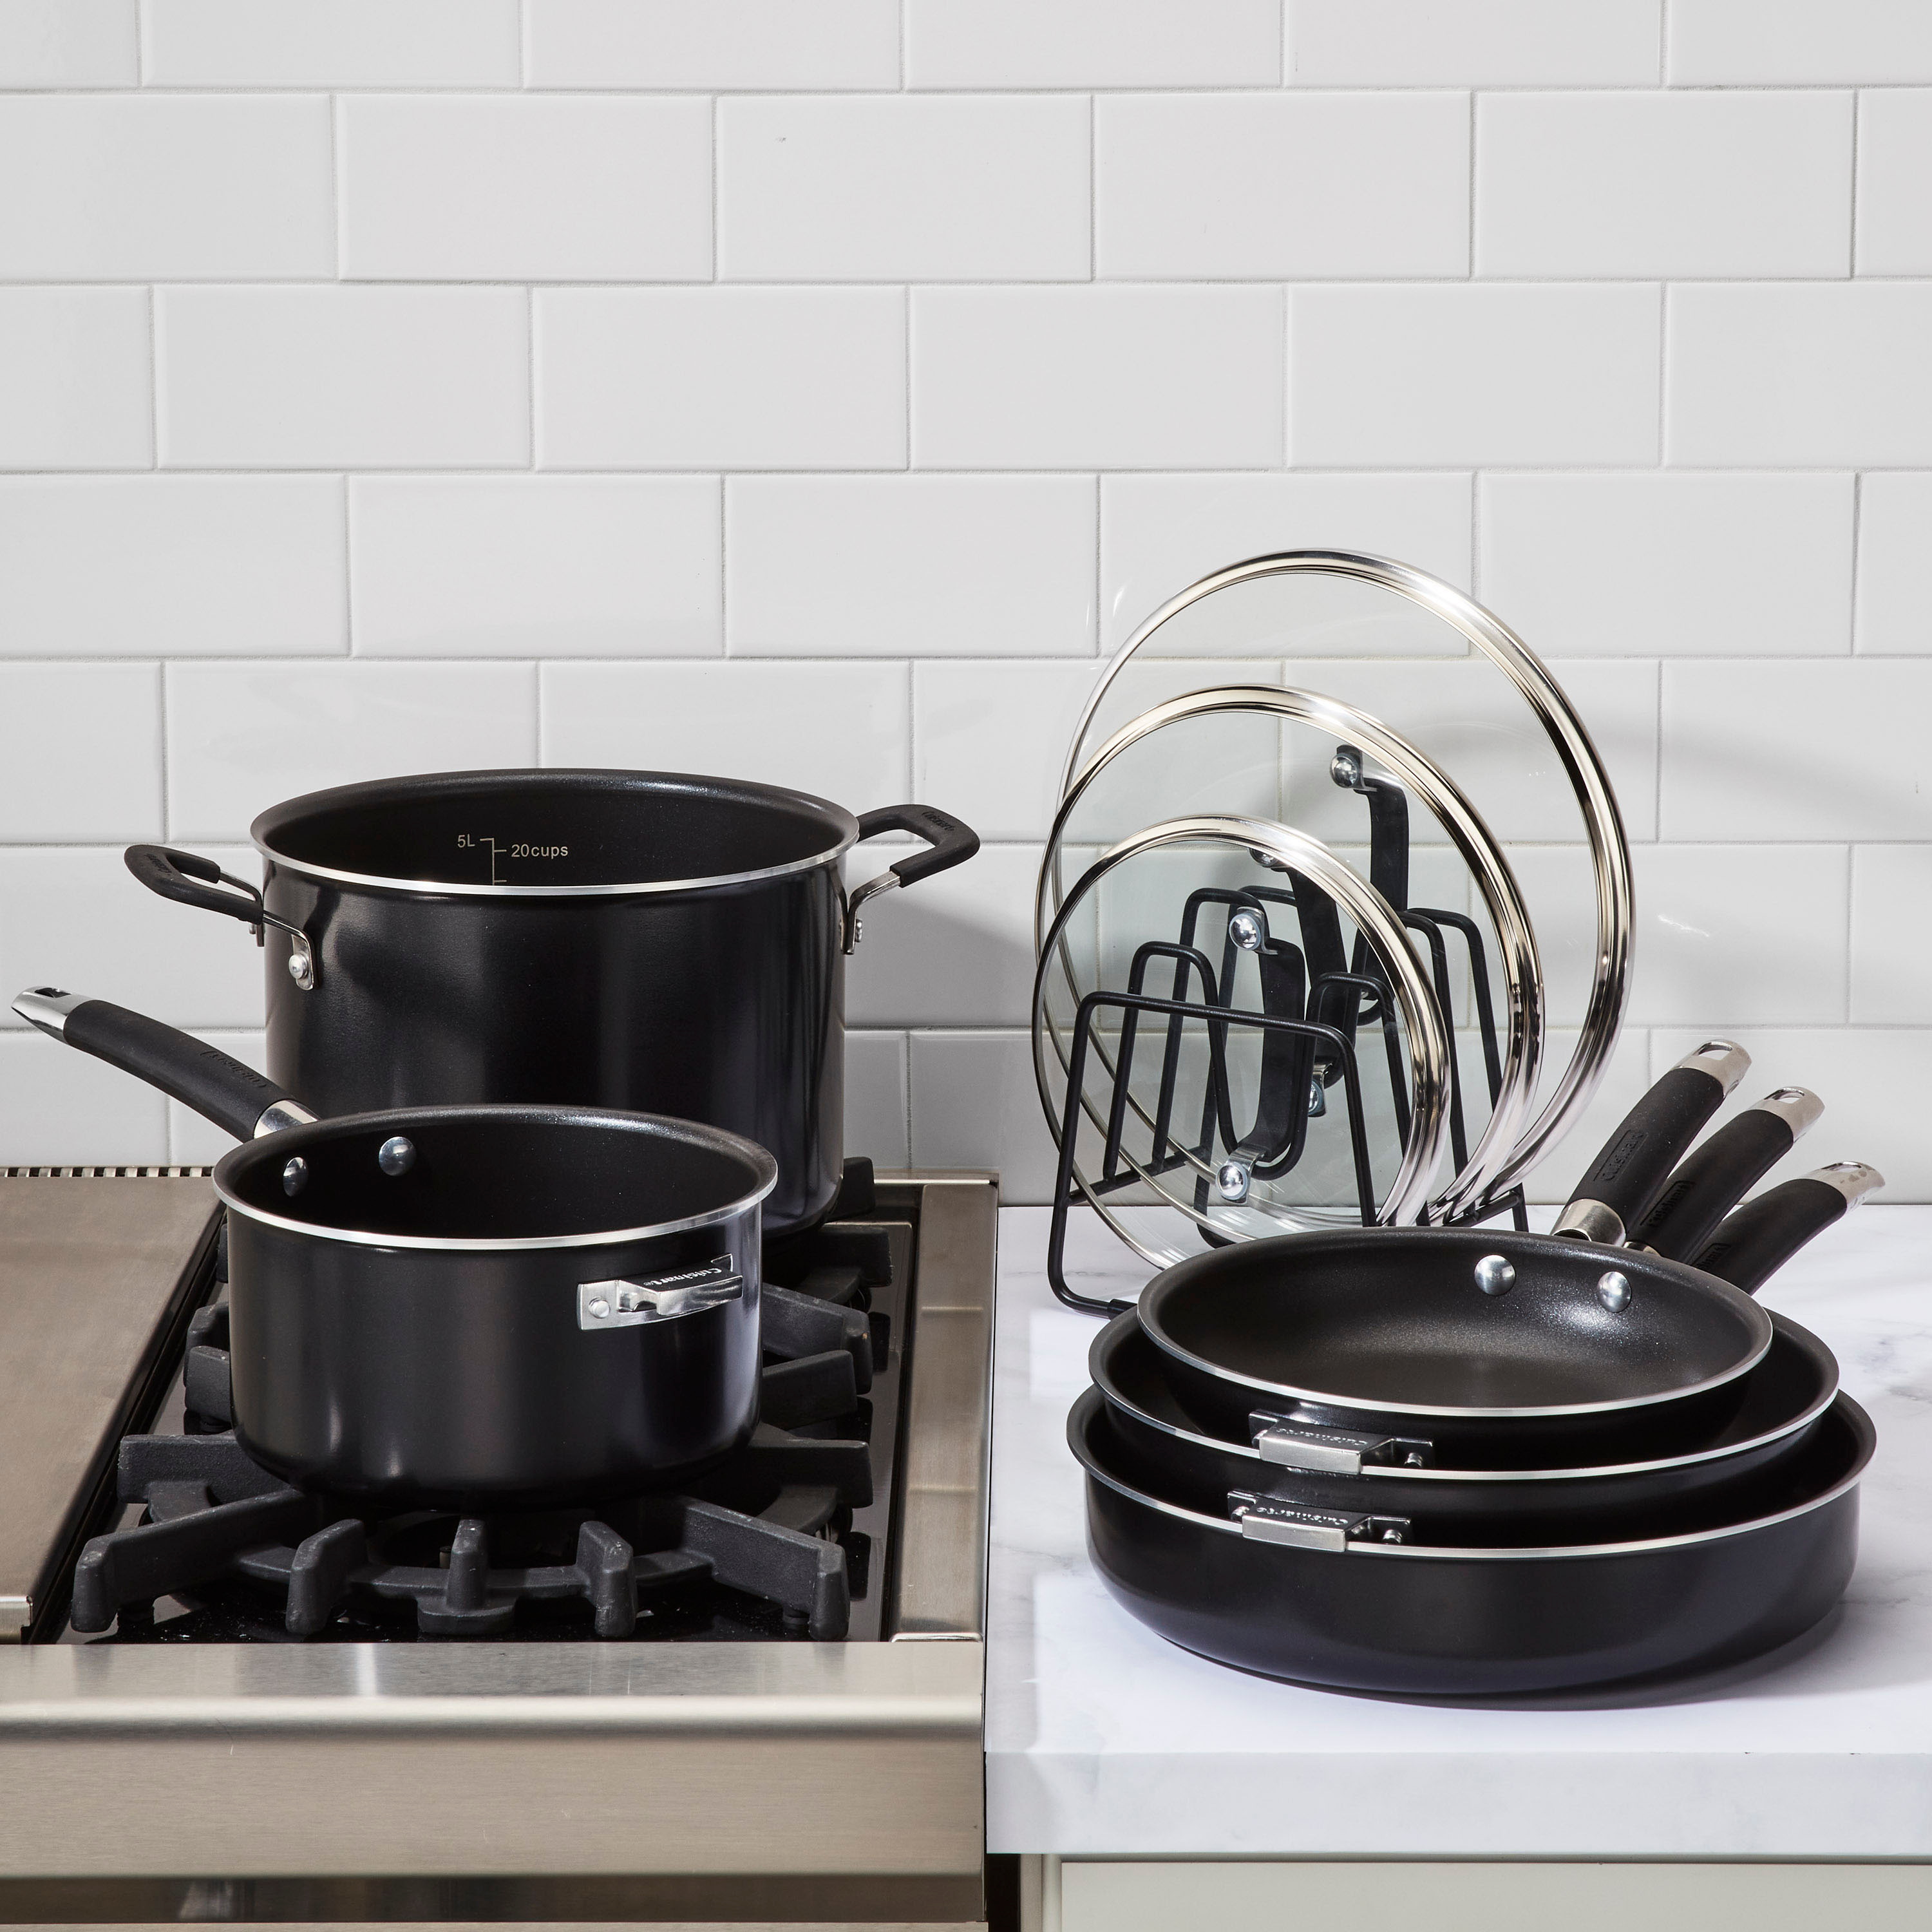 Fingerhut - Cuisinart Complete Chef 22-Pc. Nonstick Aluminum Cookware Set